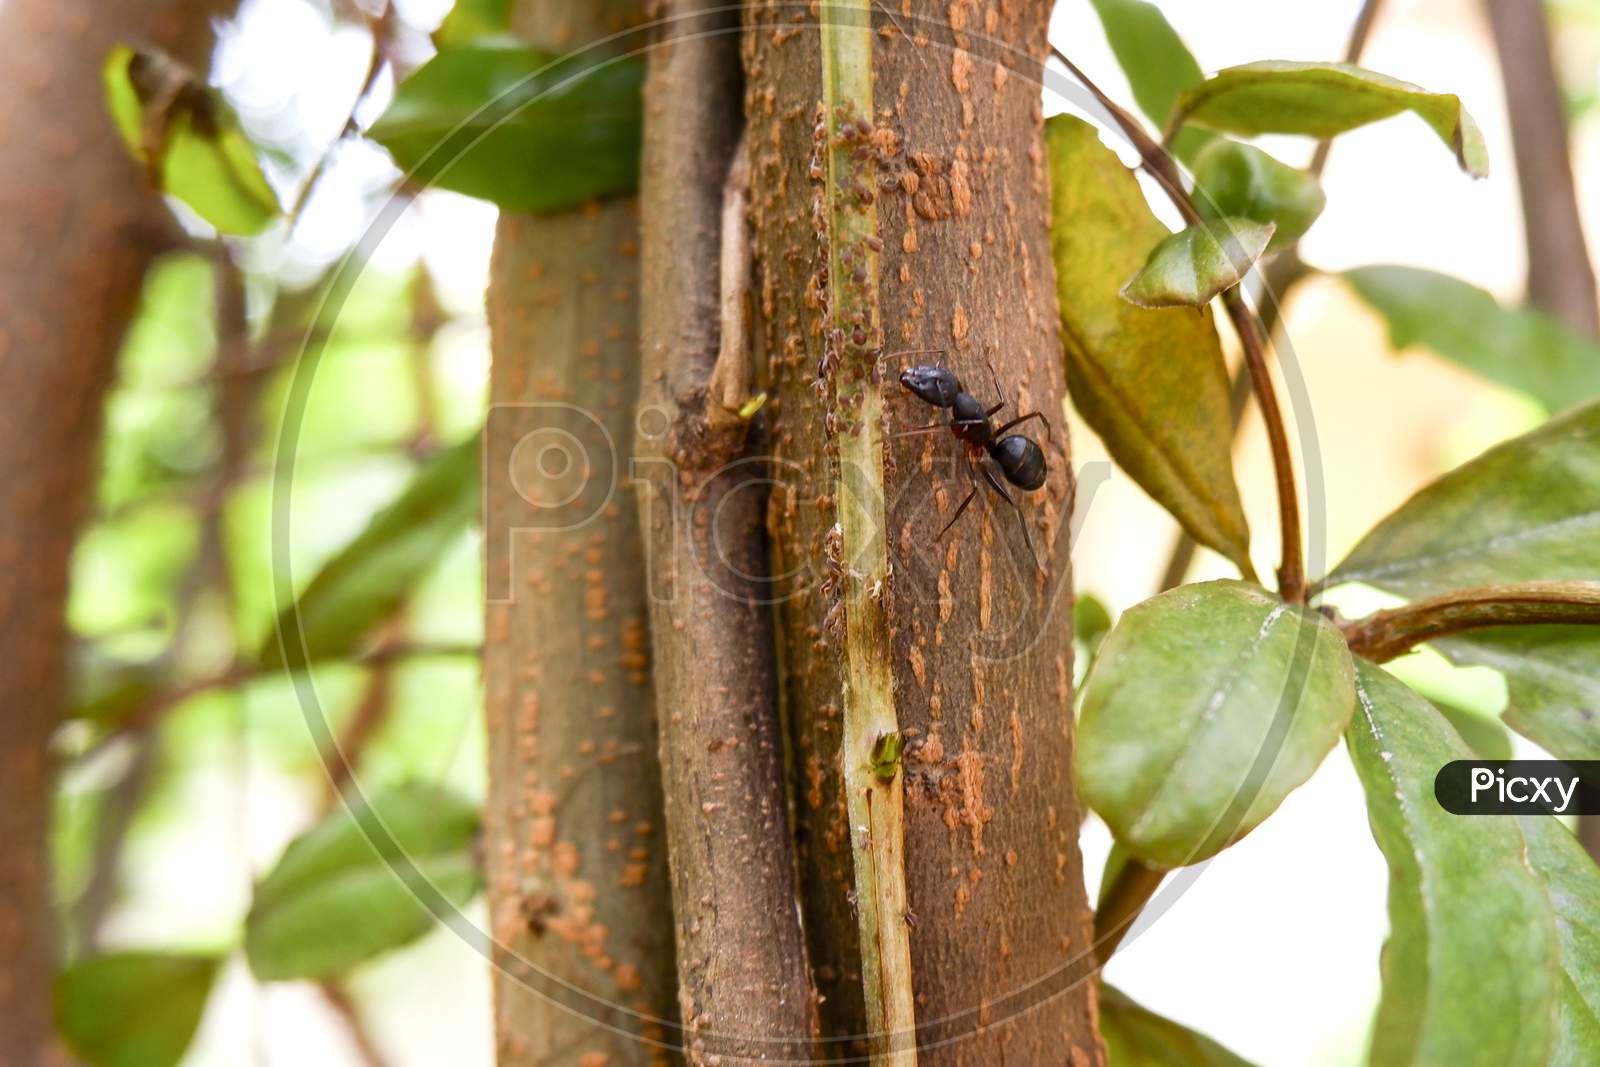 Macro Shot Of Black Ant Isolated On Tree